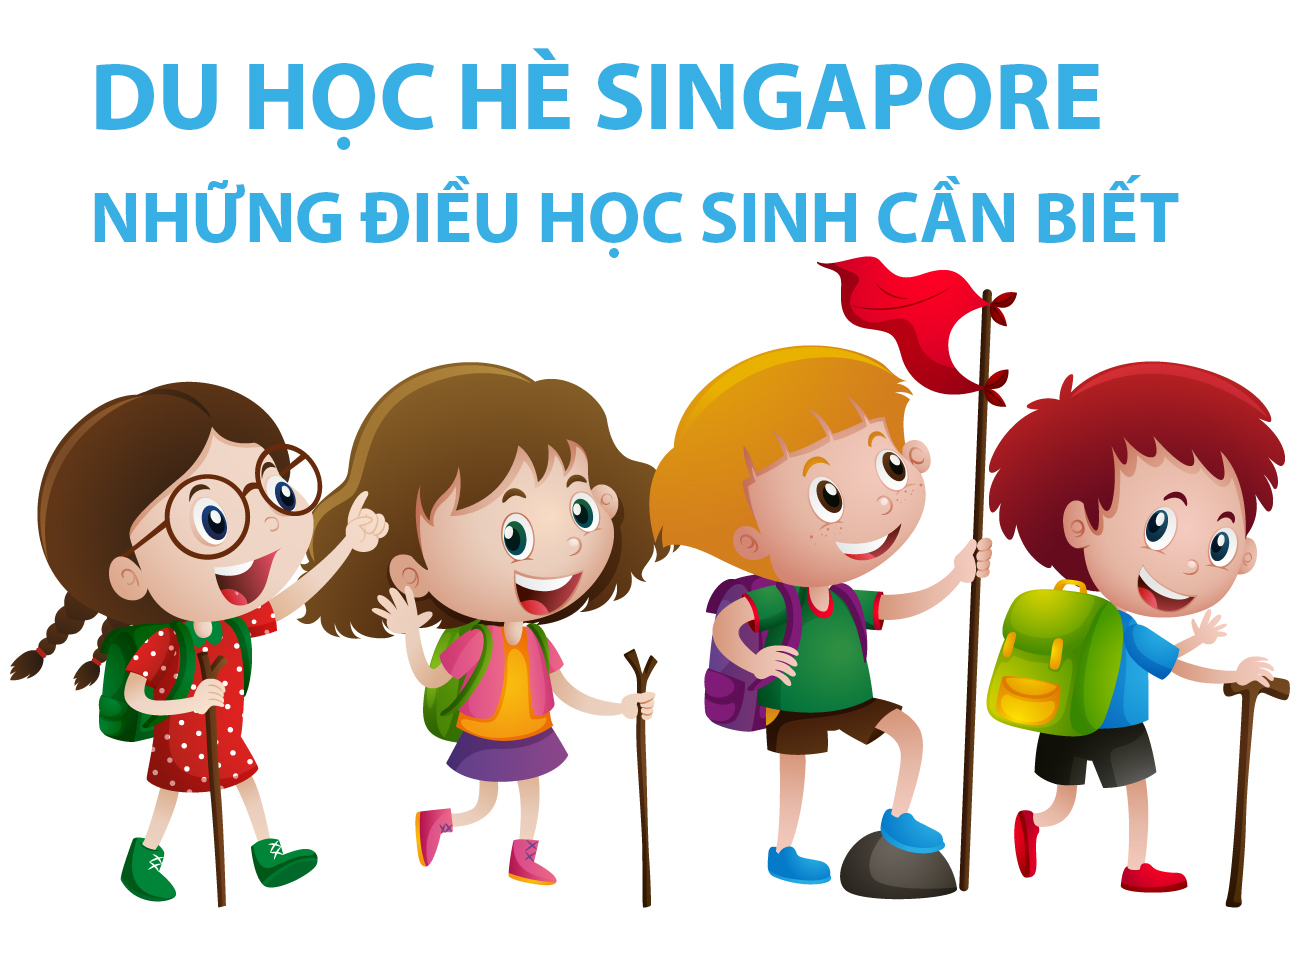 du hoc he singaporen nhung dieu can biet - Những điều học sinh cần biết du học hè Singapore